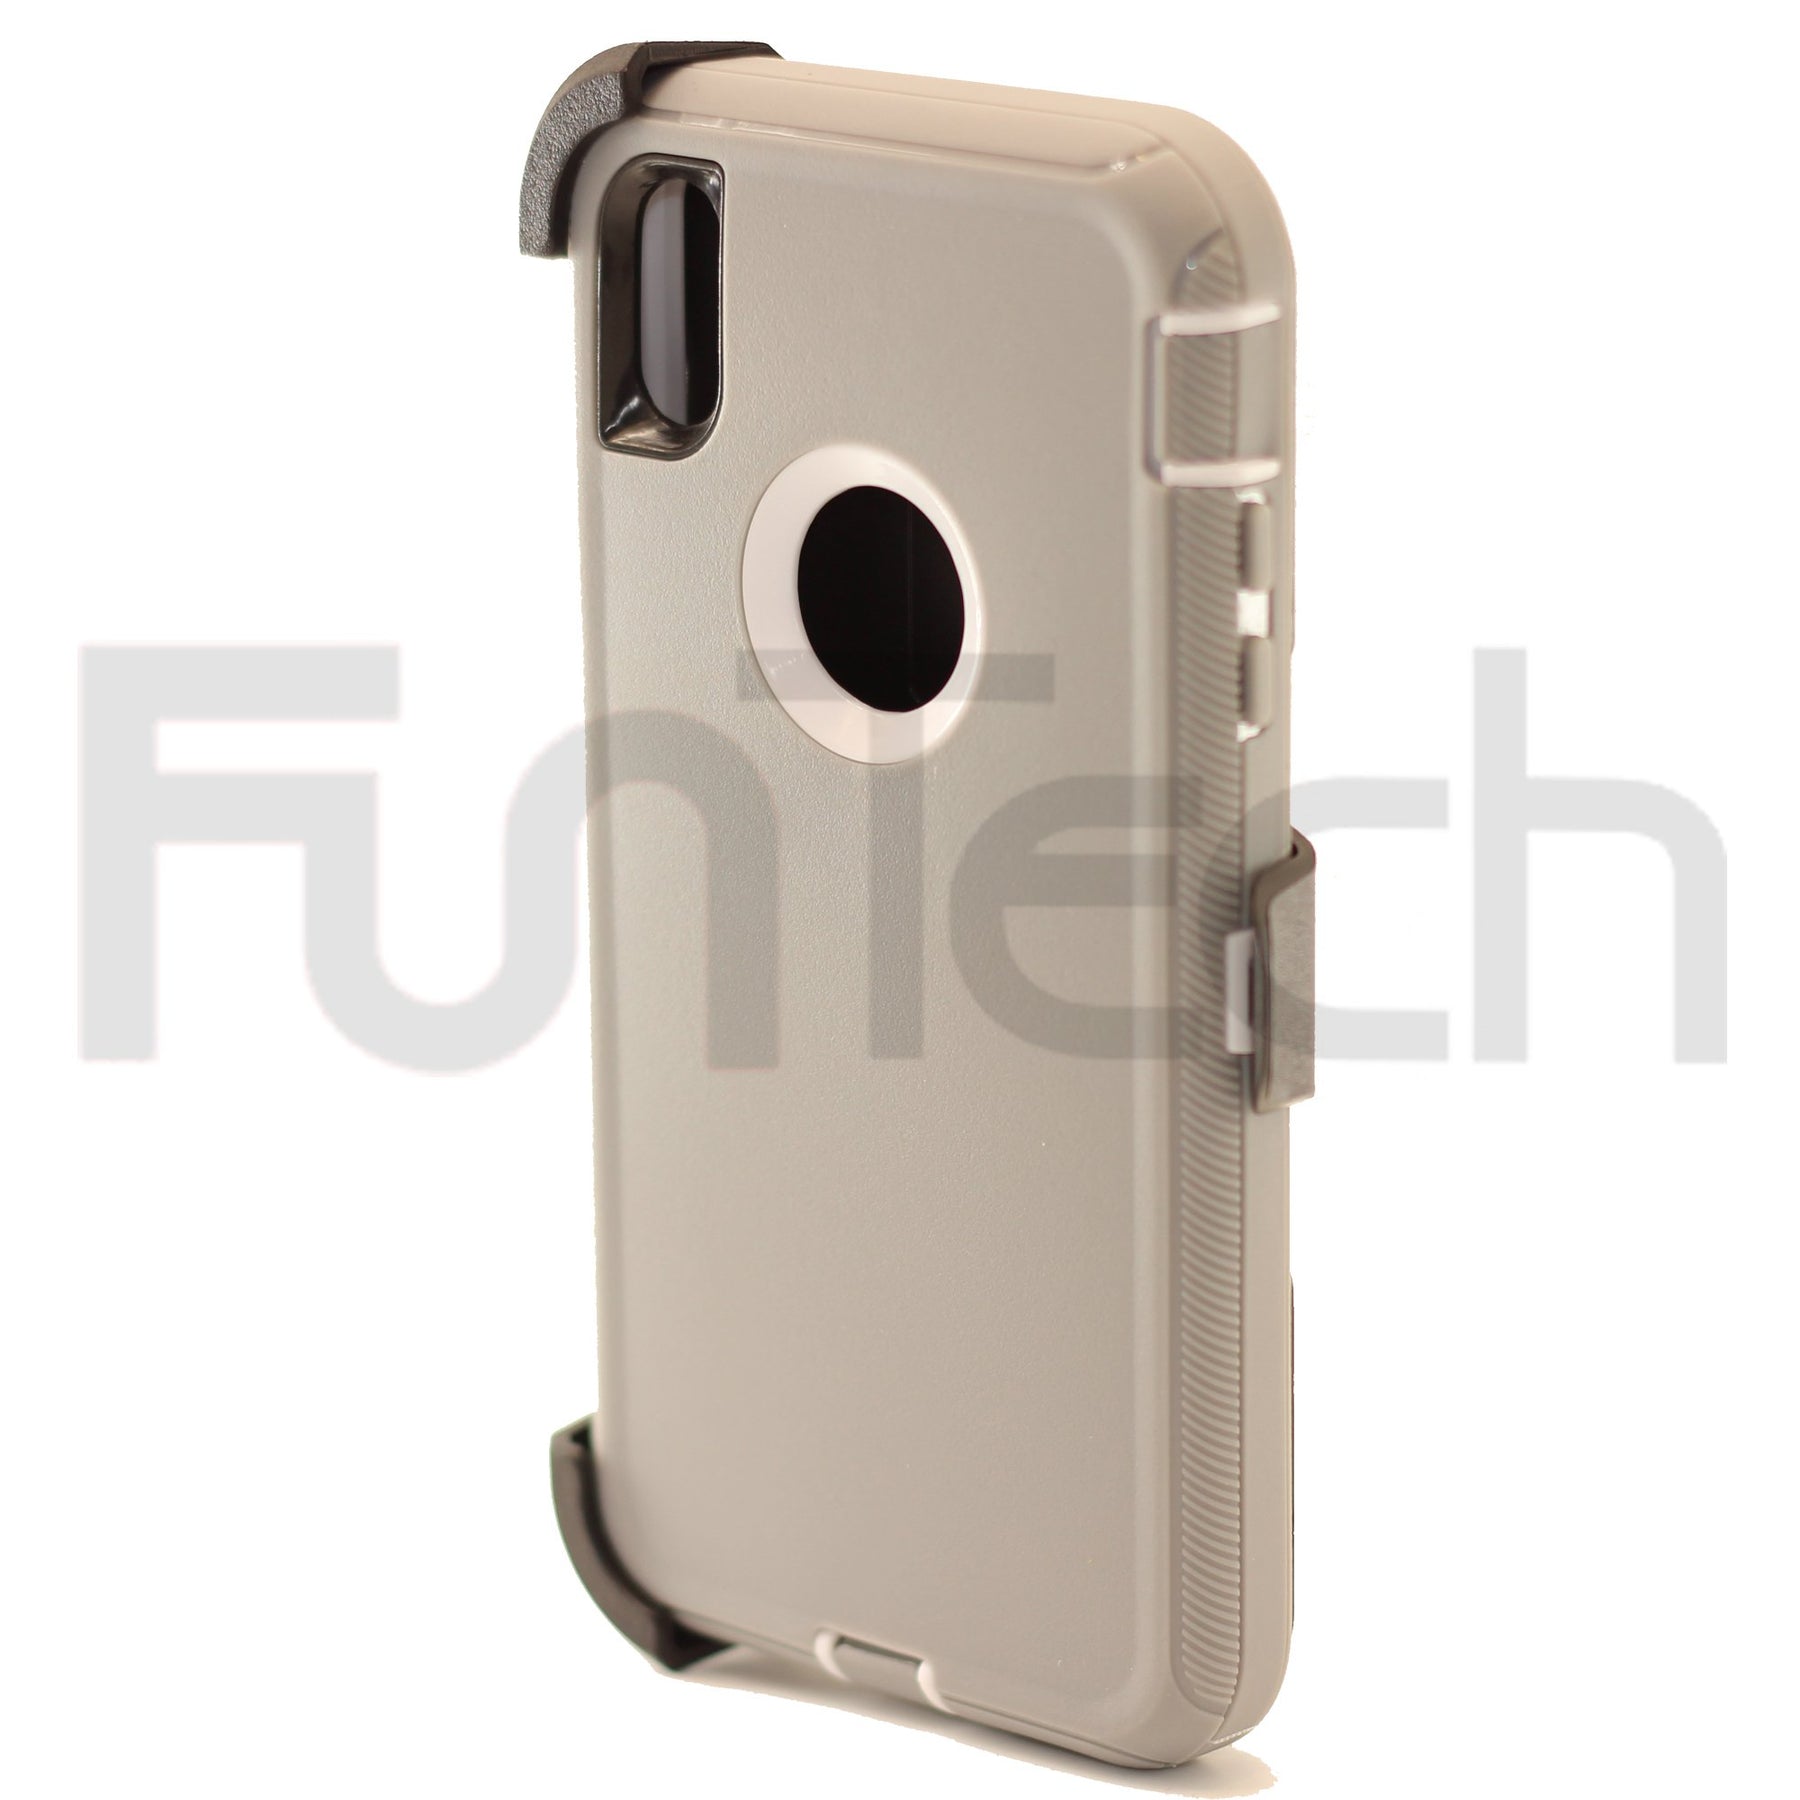 Apple iPhone XS Max Defender Case Color Grey